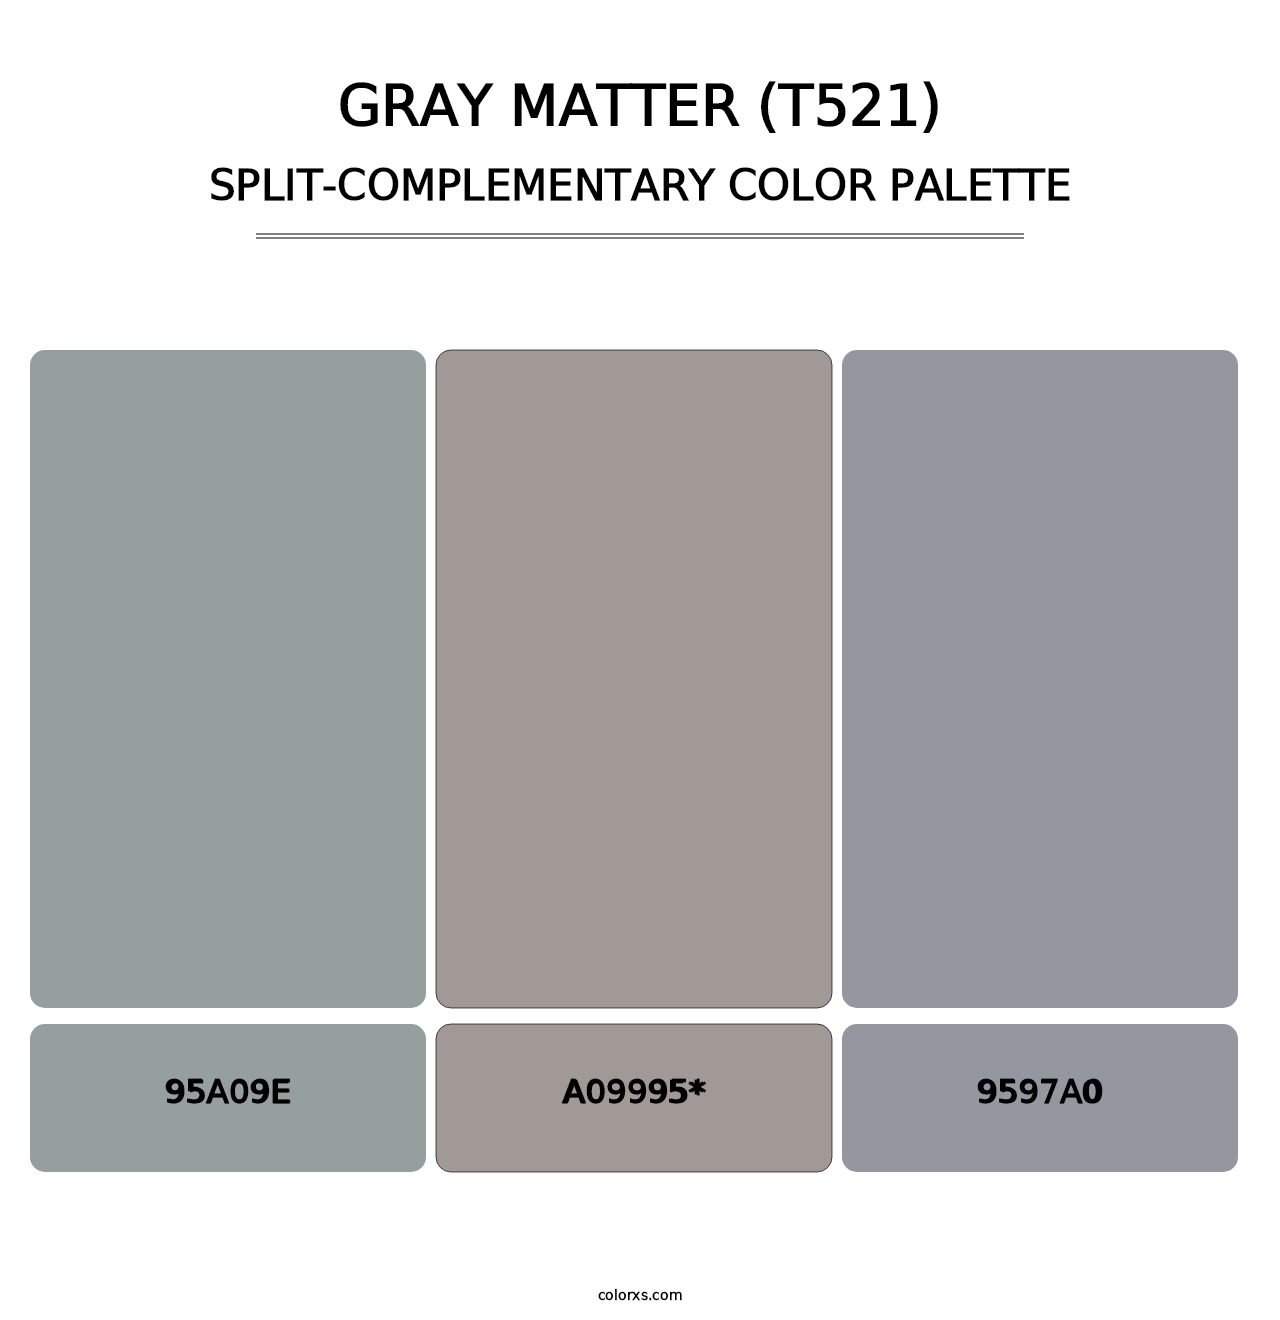 Gray Matter (T521) - Split-Complementary Color Palette